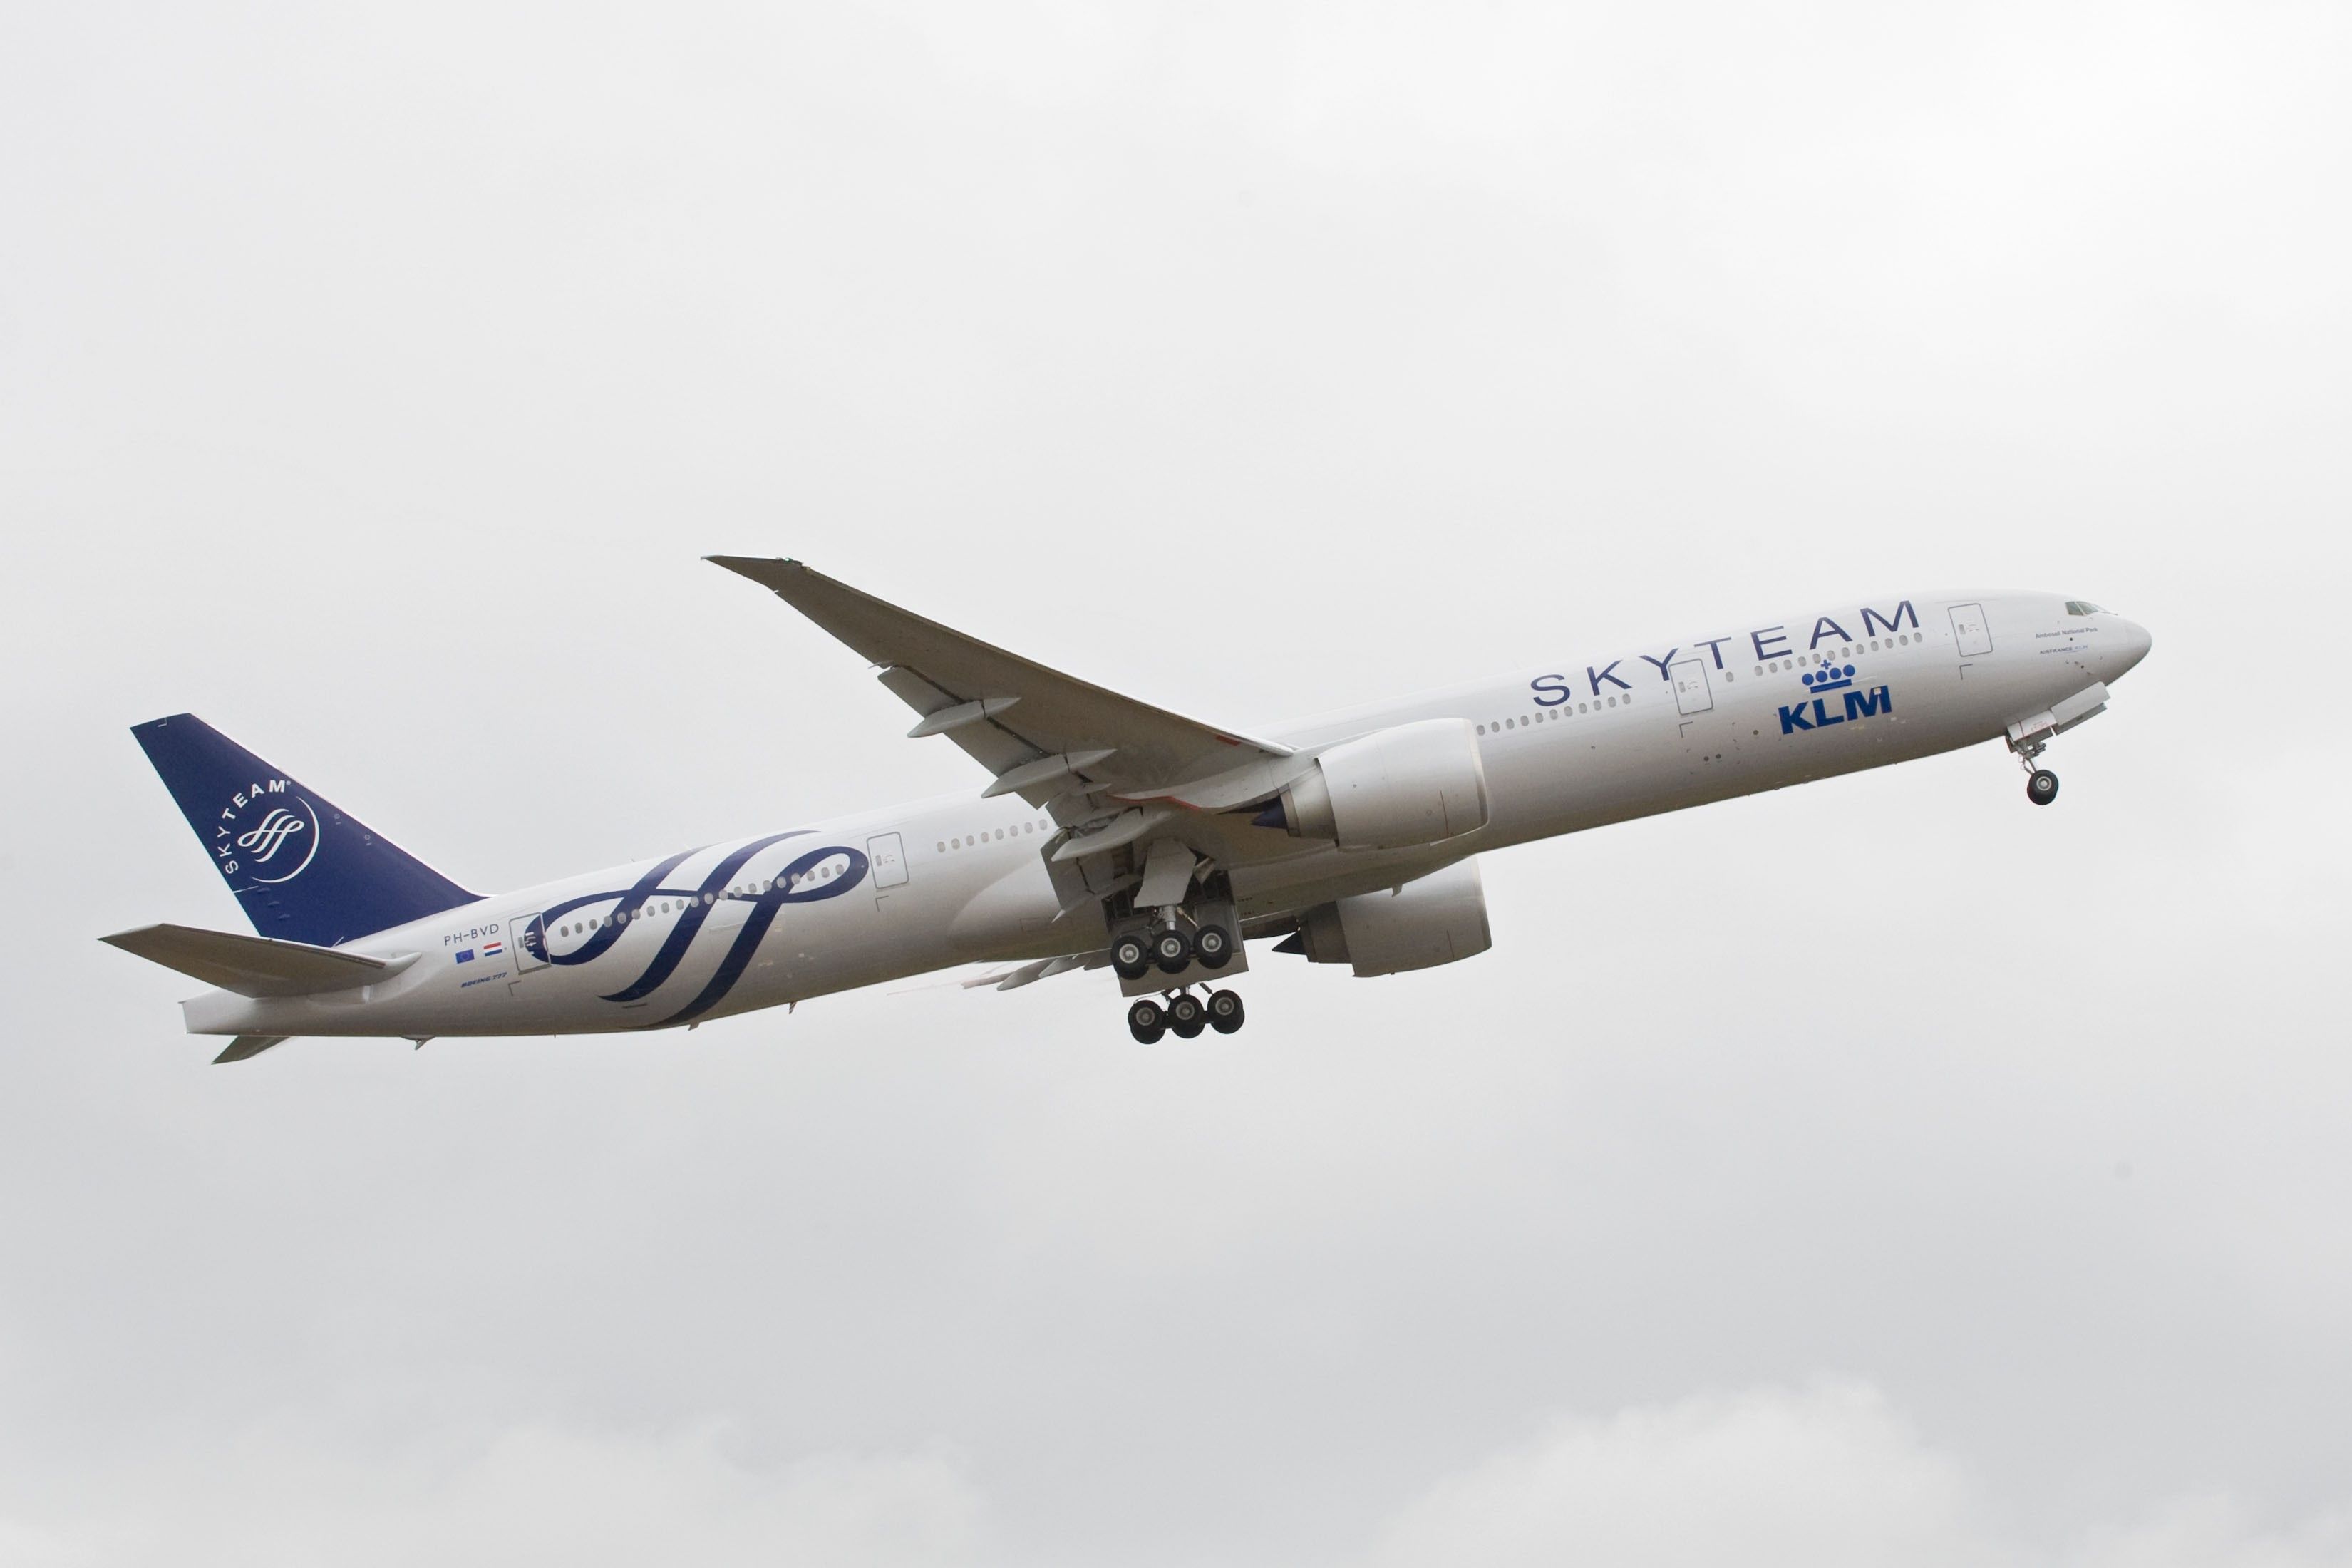 KLM Boeing 777 SkyTeam Livery Taking Off